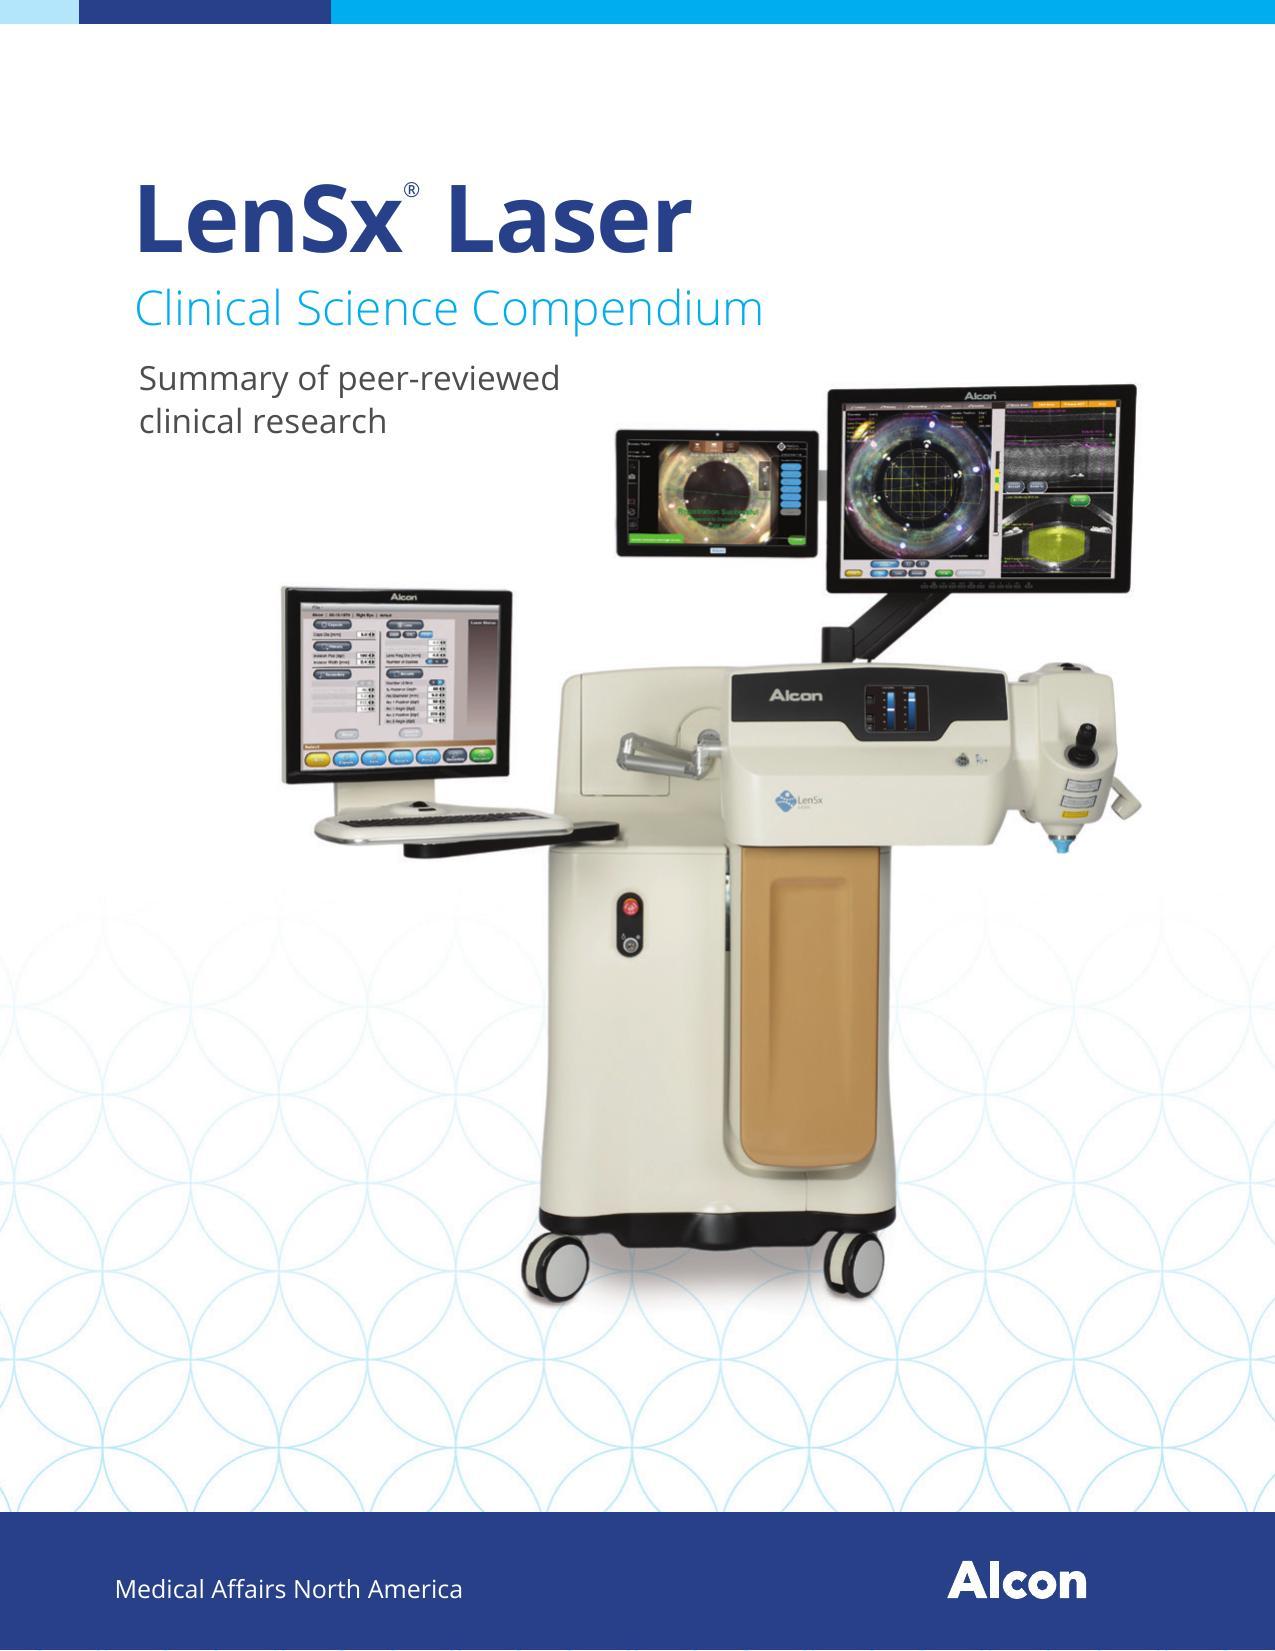 lensx-laser-clinical-science-compendium.pdf